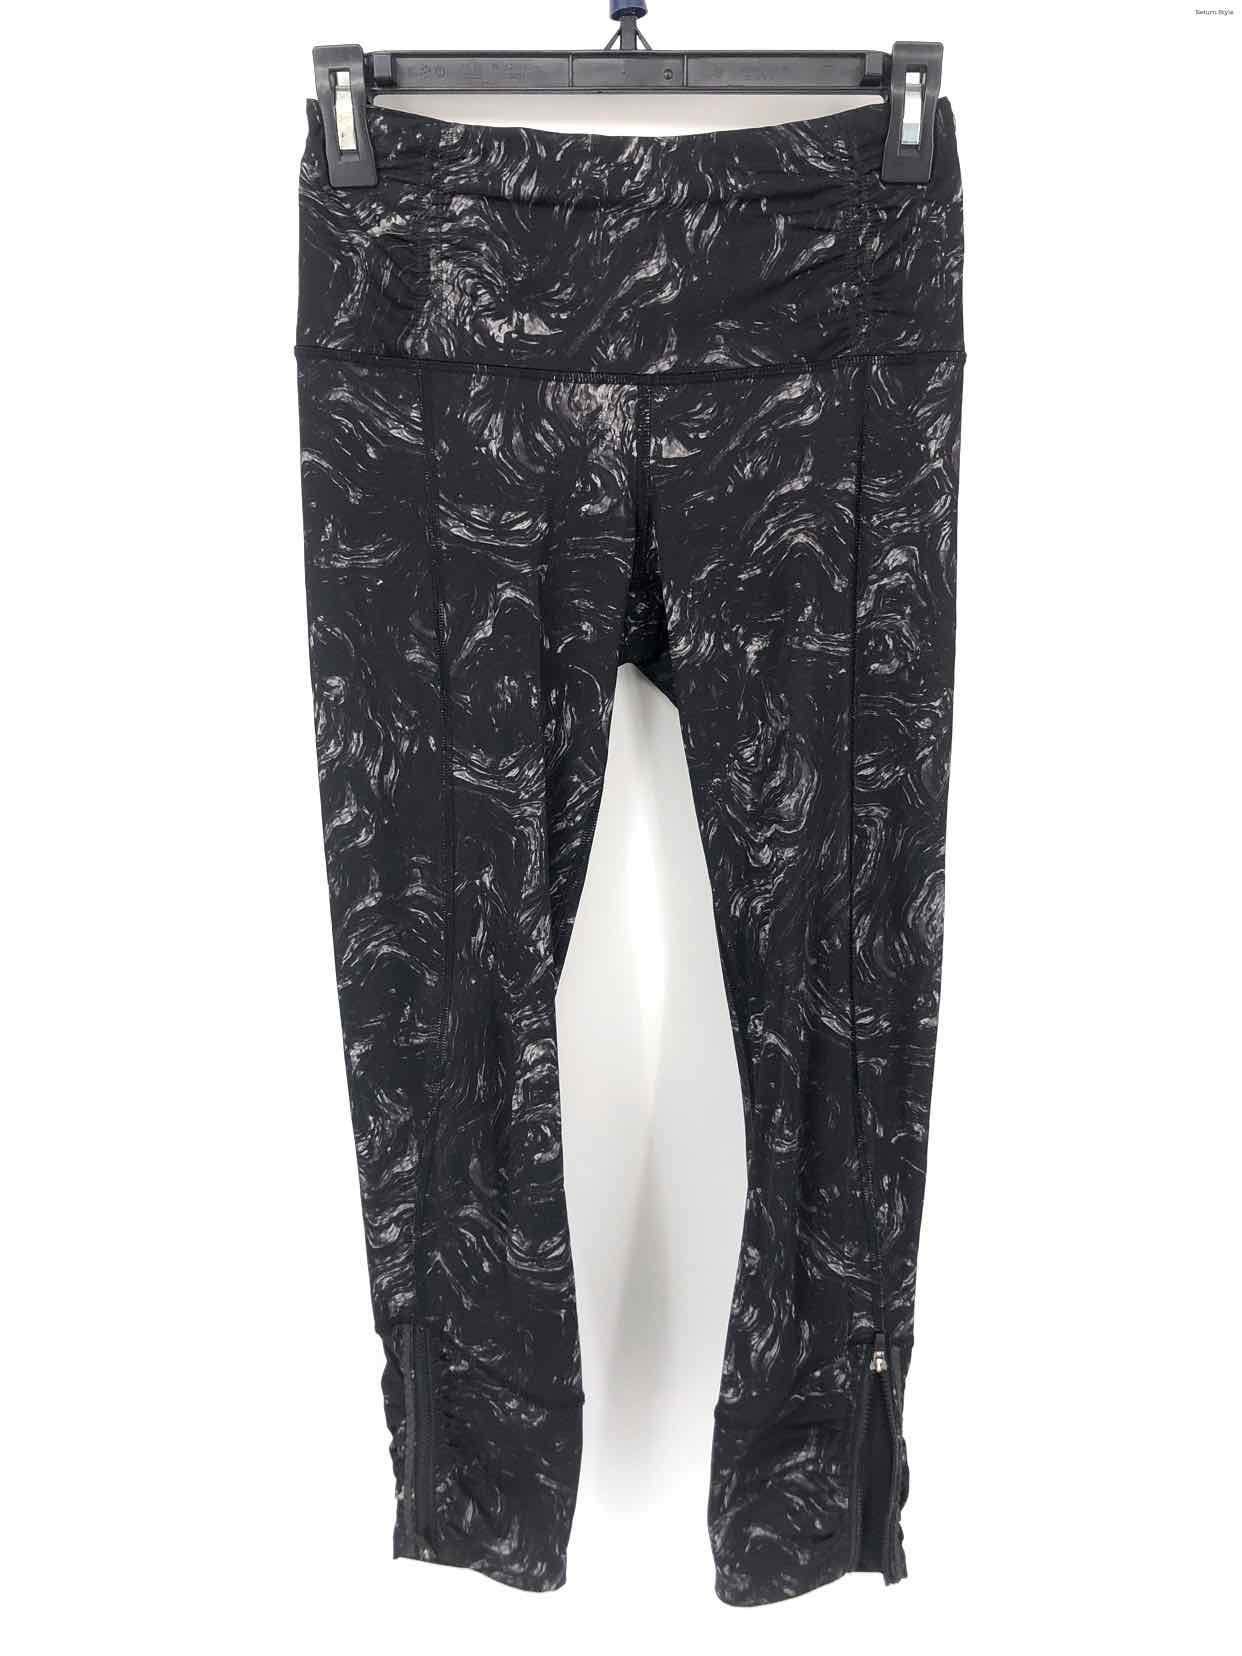 LULULEMON Black Gray Marble Print 7/8 Length Size 4 (S) Activewear Bottoms  – ReturnStyle